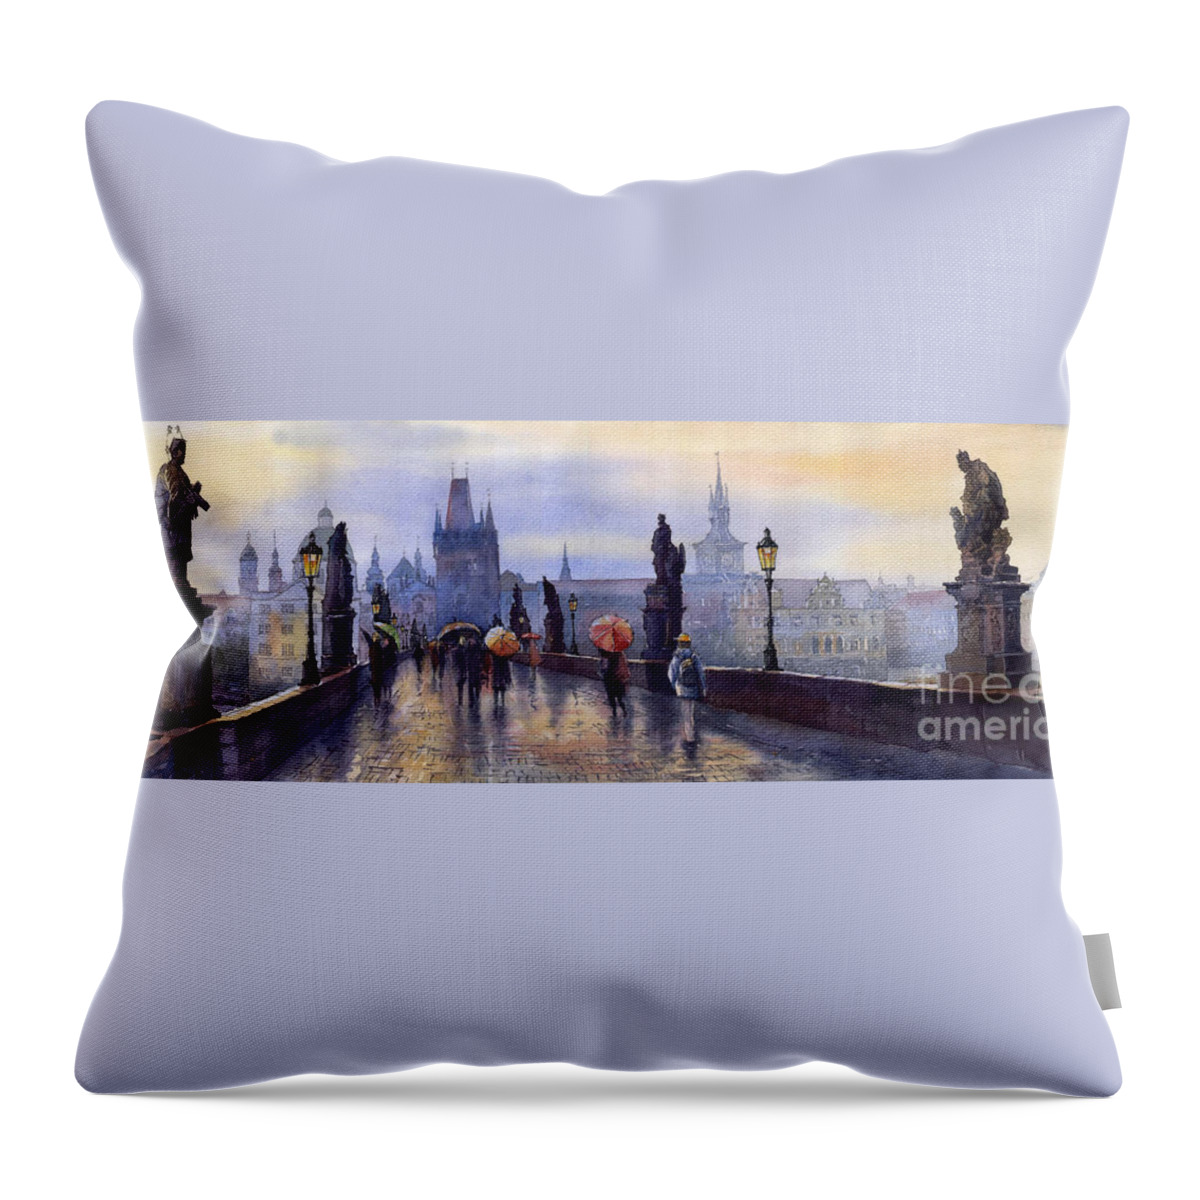 Cityscape Throw Pillow featuring the painting Prague Charles Bridge by Yuriy Shevchuk